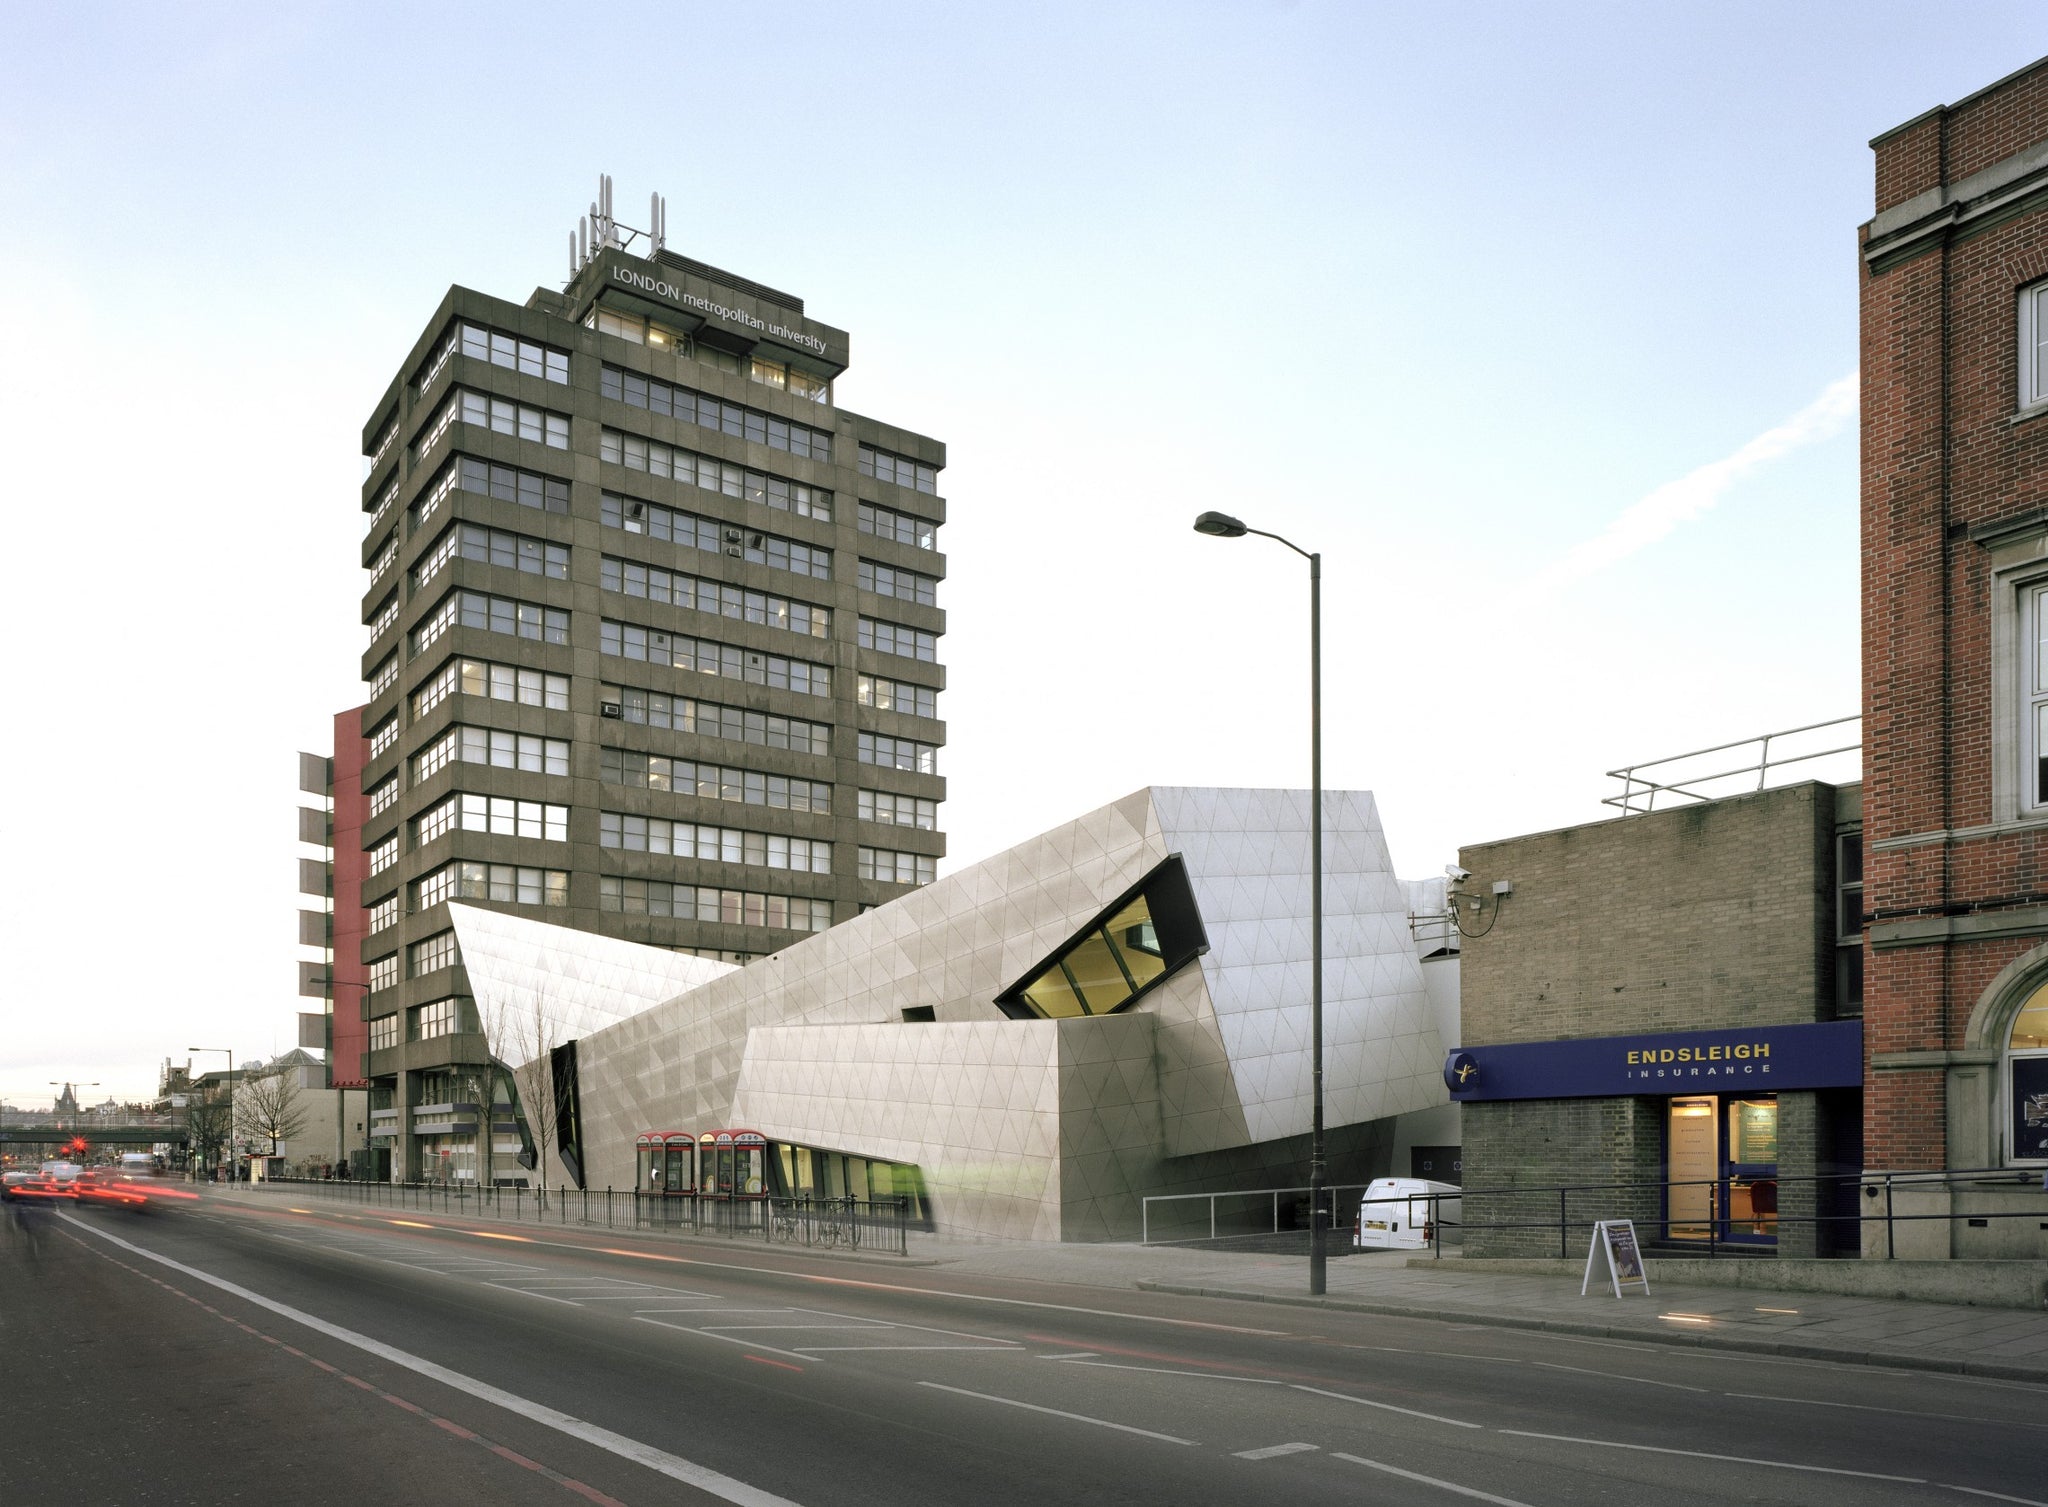 London Metropolitan University Graduate Centre by Daniel Libeskind